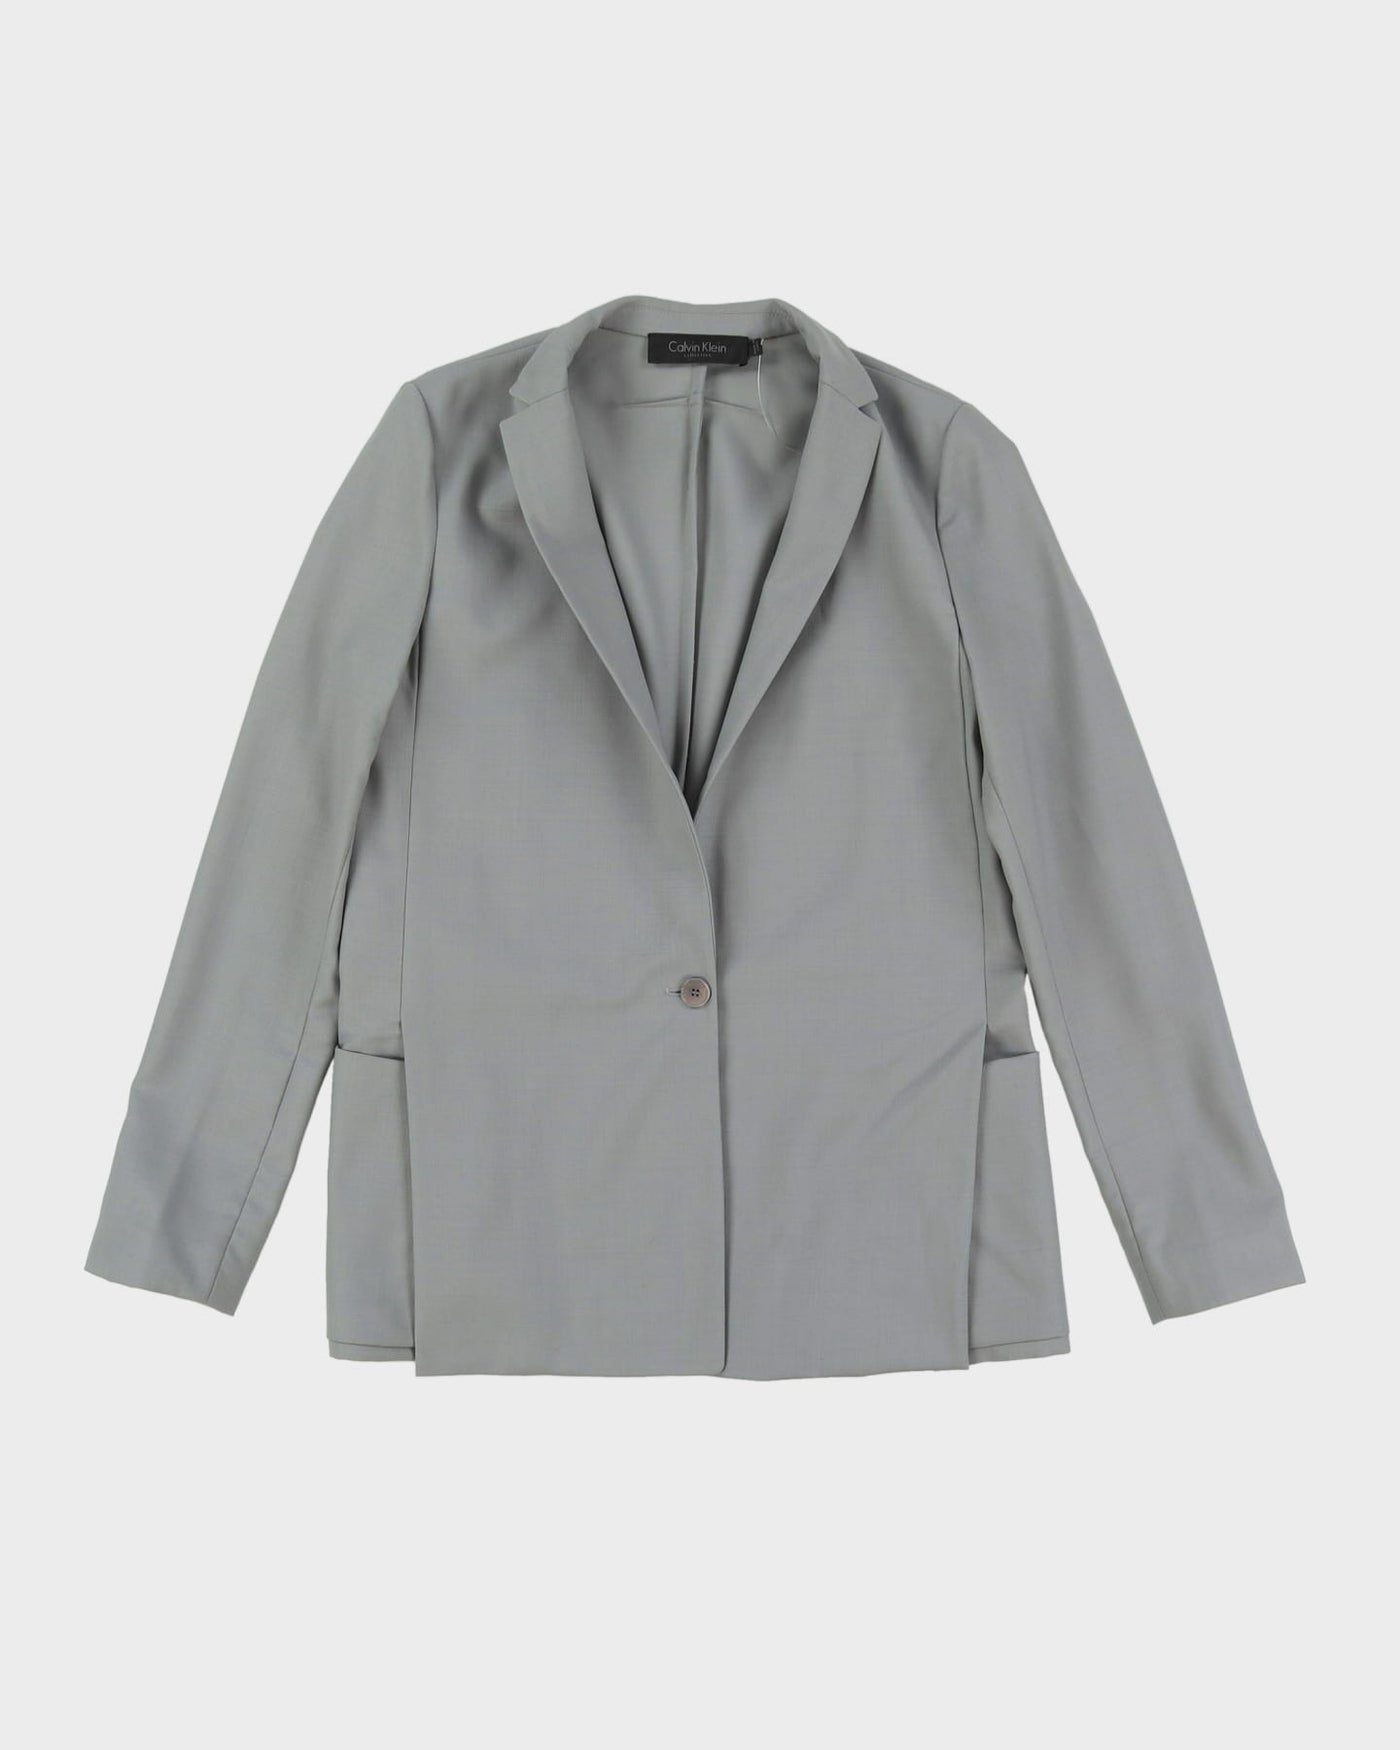 Calvin Klein 1990s Grey Blazer Style Jacket - S